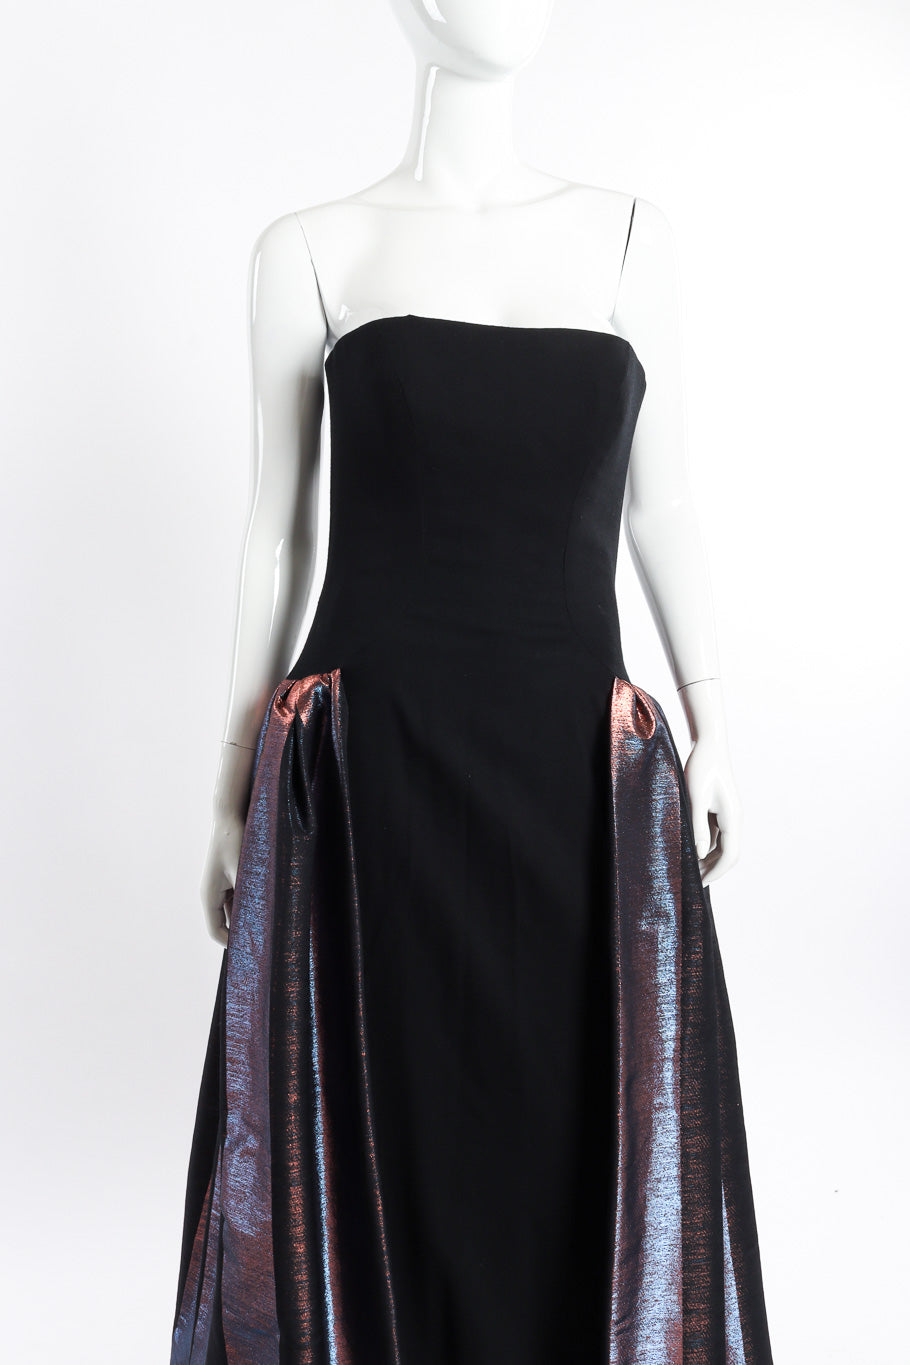 Vintage Bob Mackie Strapless Iridescent Gown front on mannequin closeup @recessla